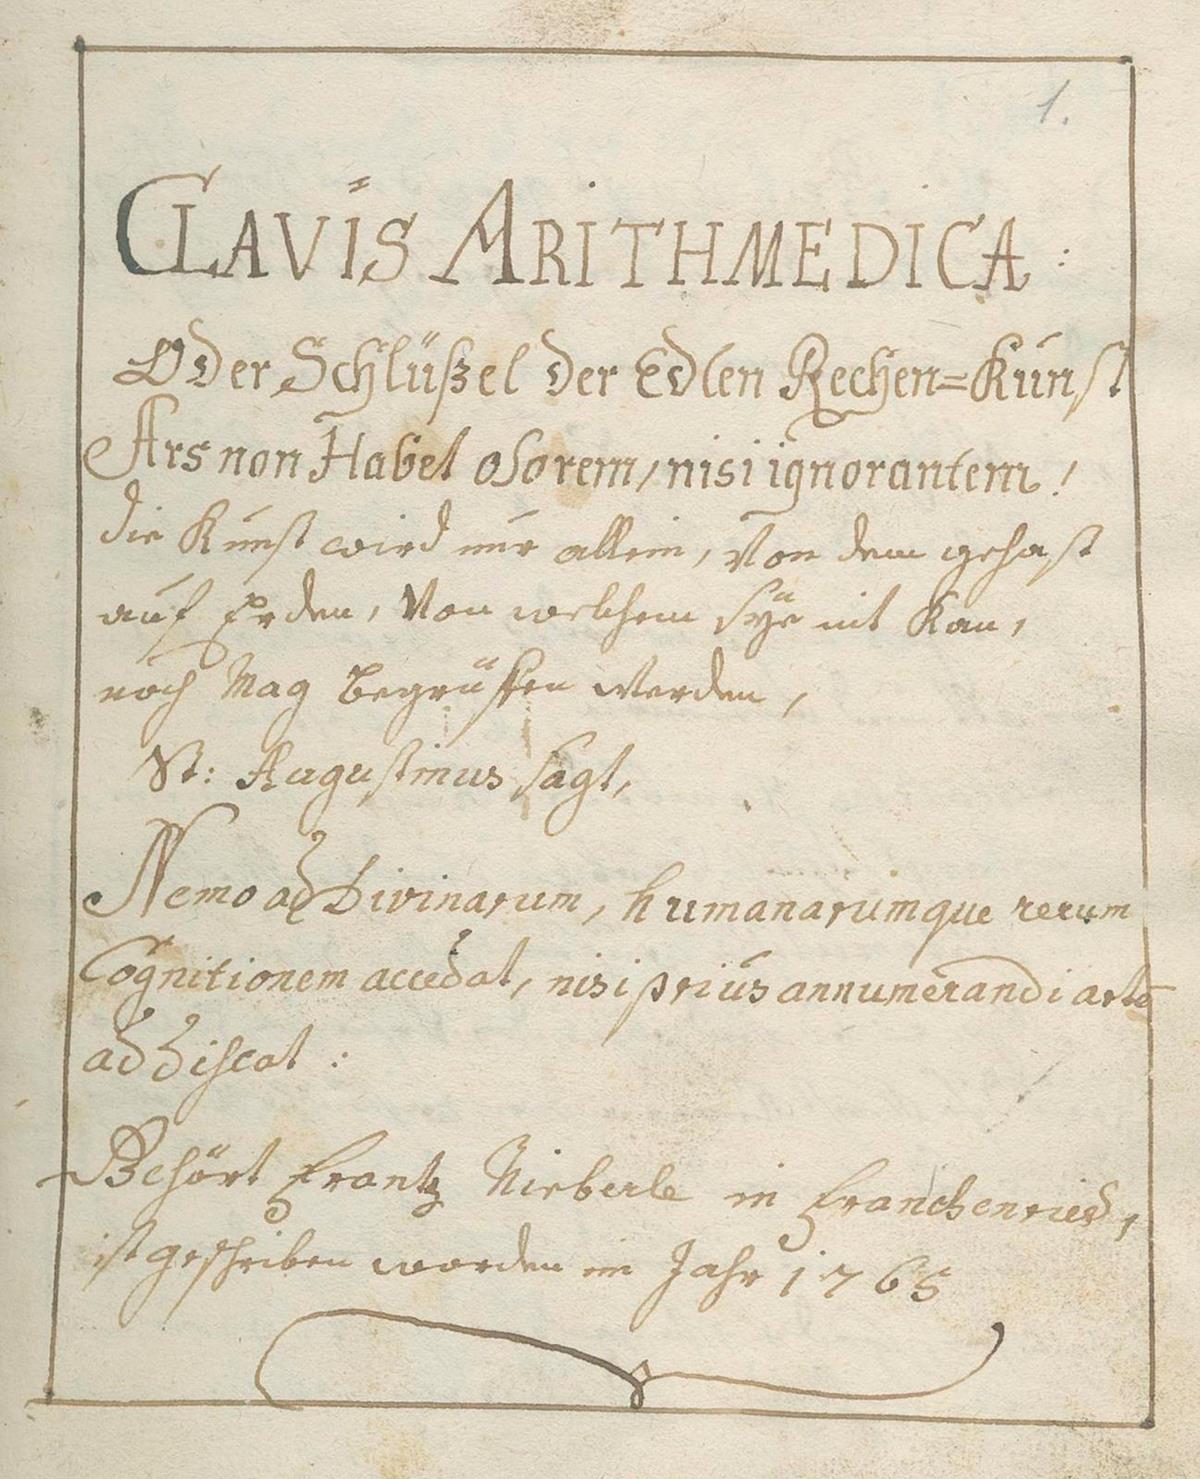 Clavis Arithmedica | Bild Nr.1